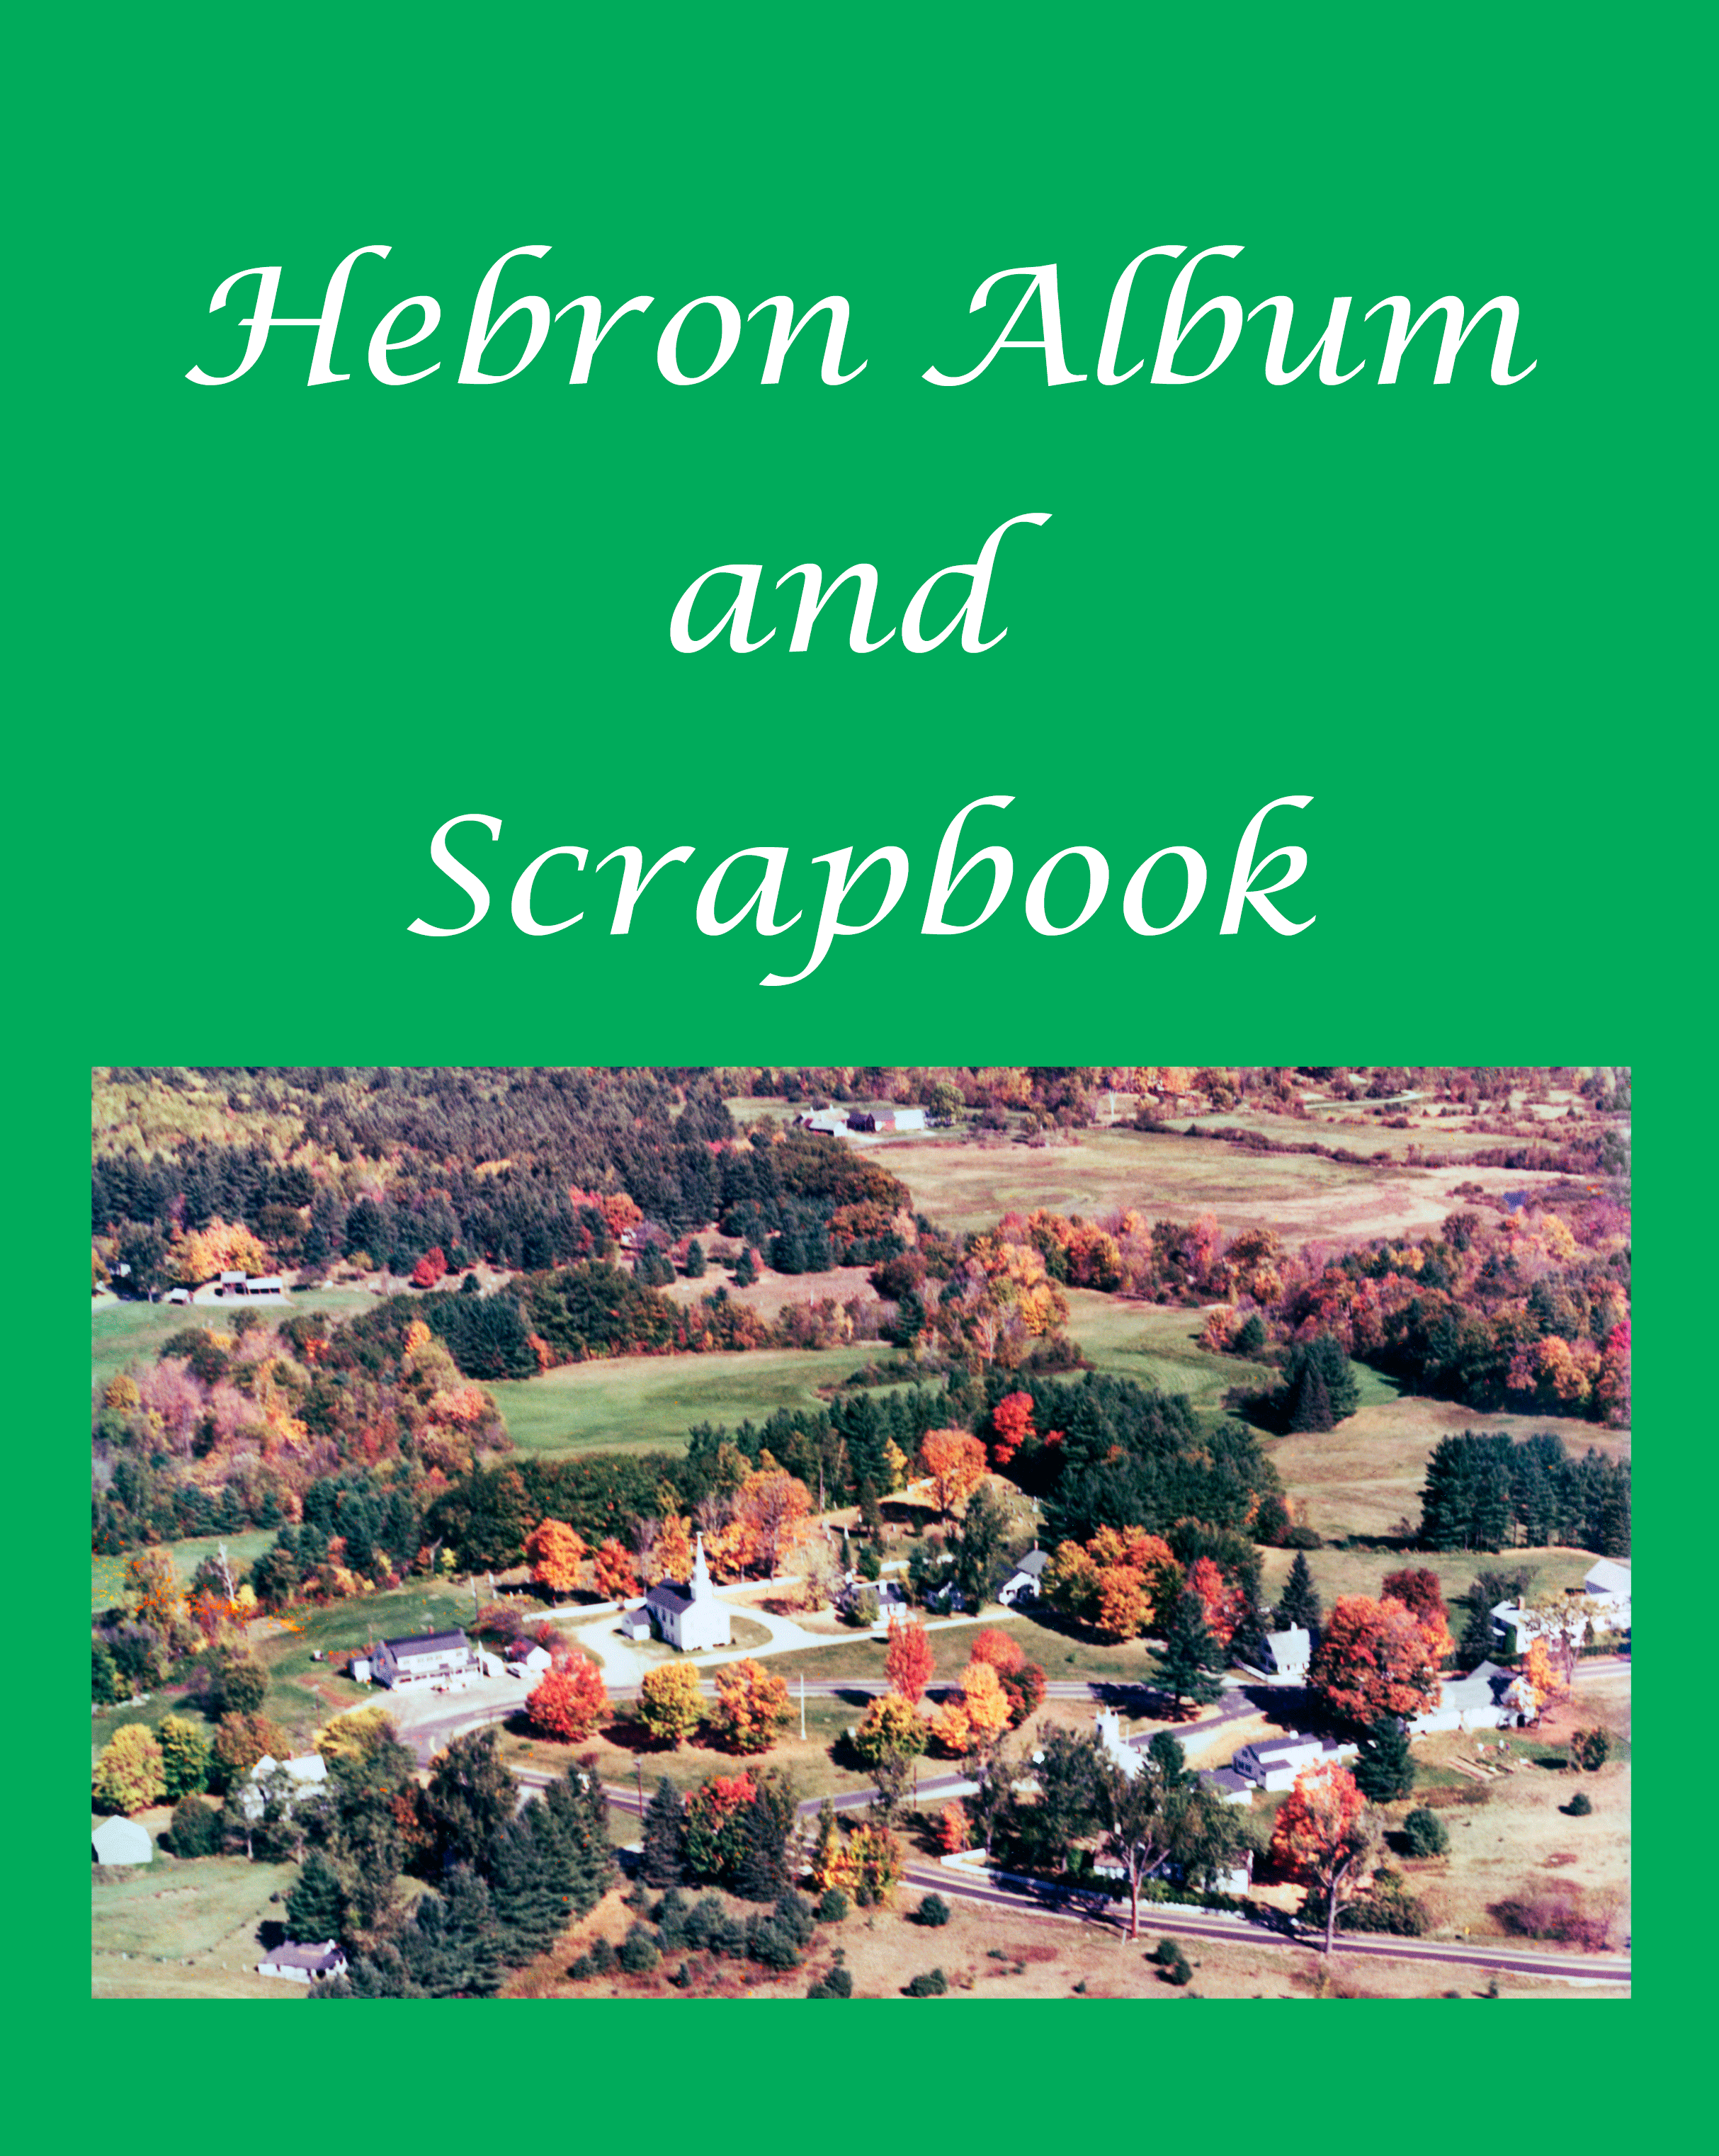 Hebron-Album-Cover-03-8x10